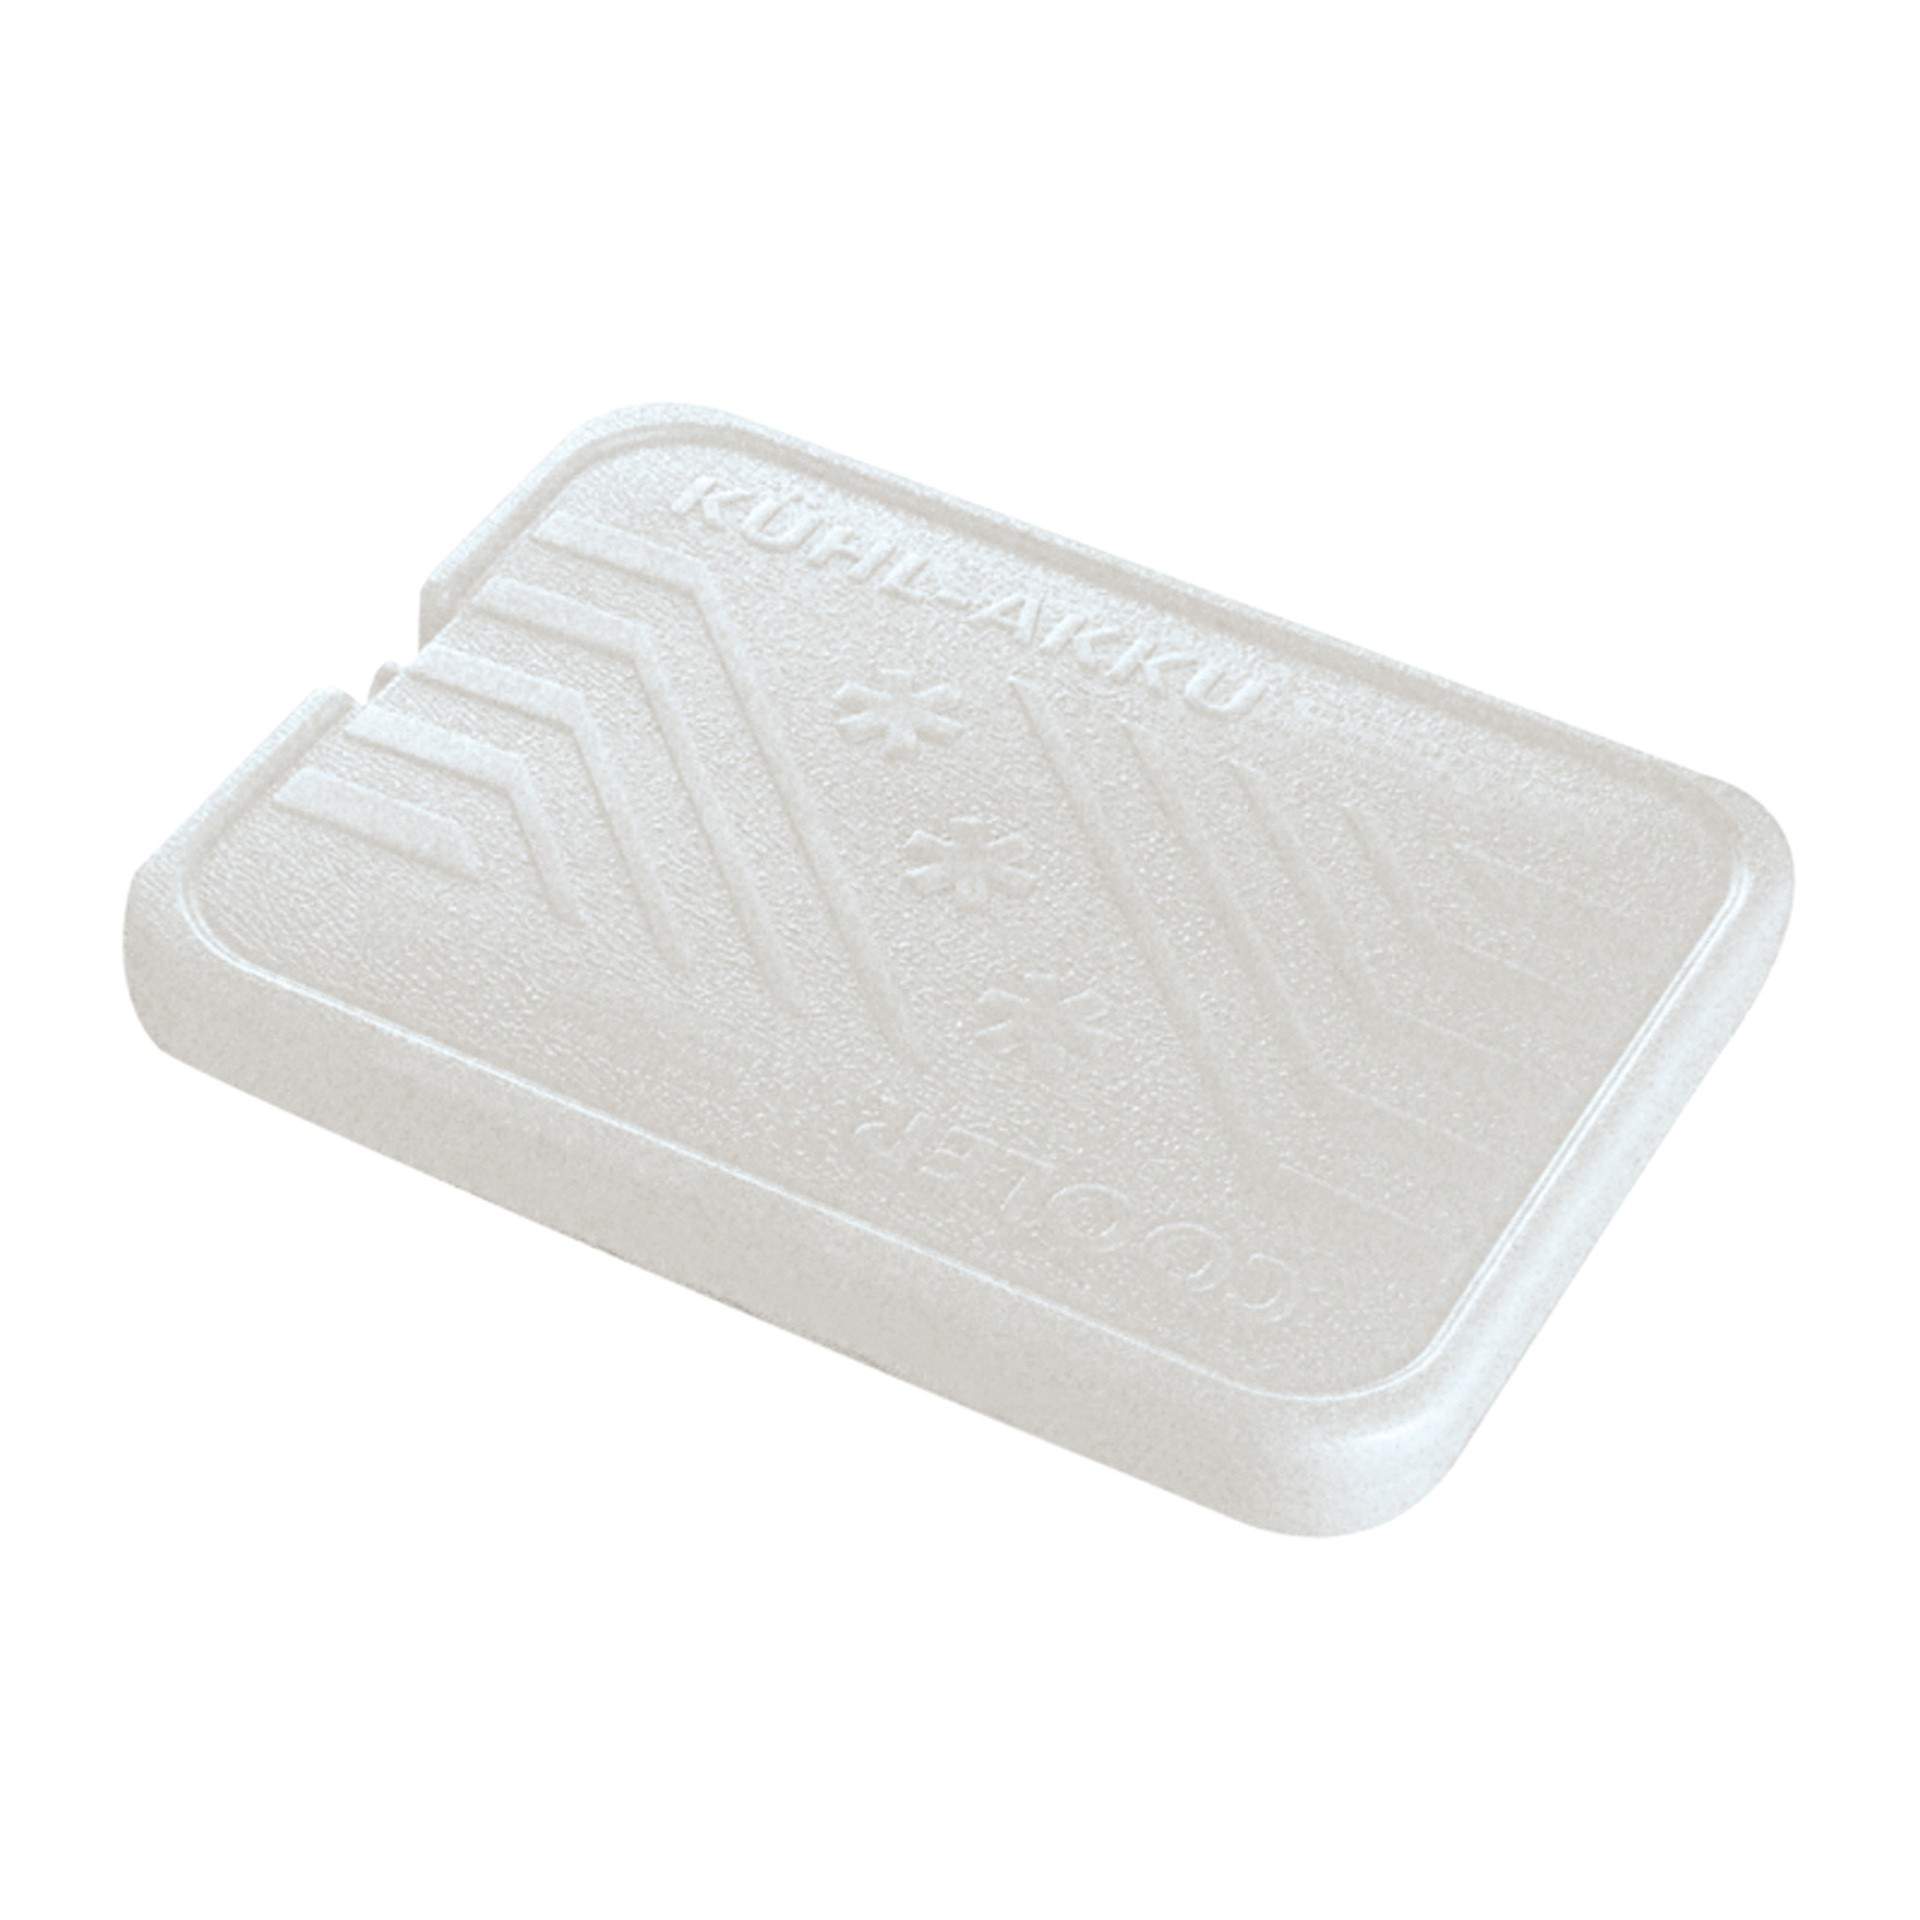 Kühlakku - gefüllt mit Kühlflüssigkeit - Serie Focus - weiß - Abm. 24,5 x 19 x 3 cm - Polyethylen - 10791-B